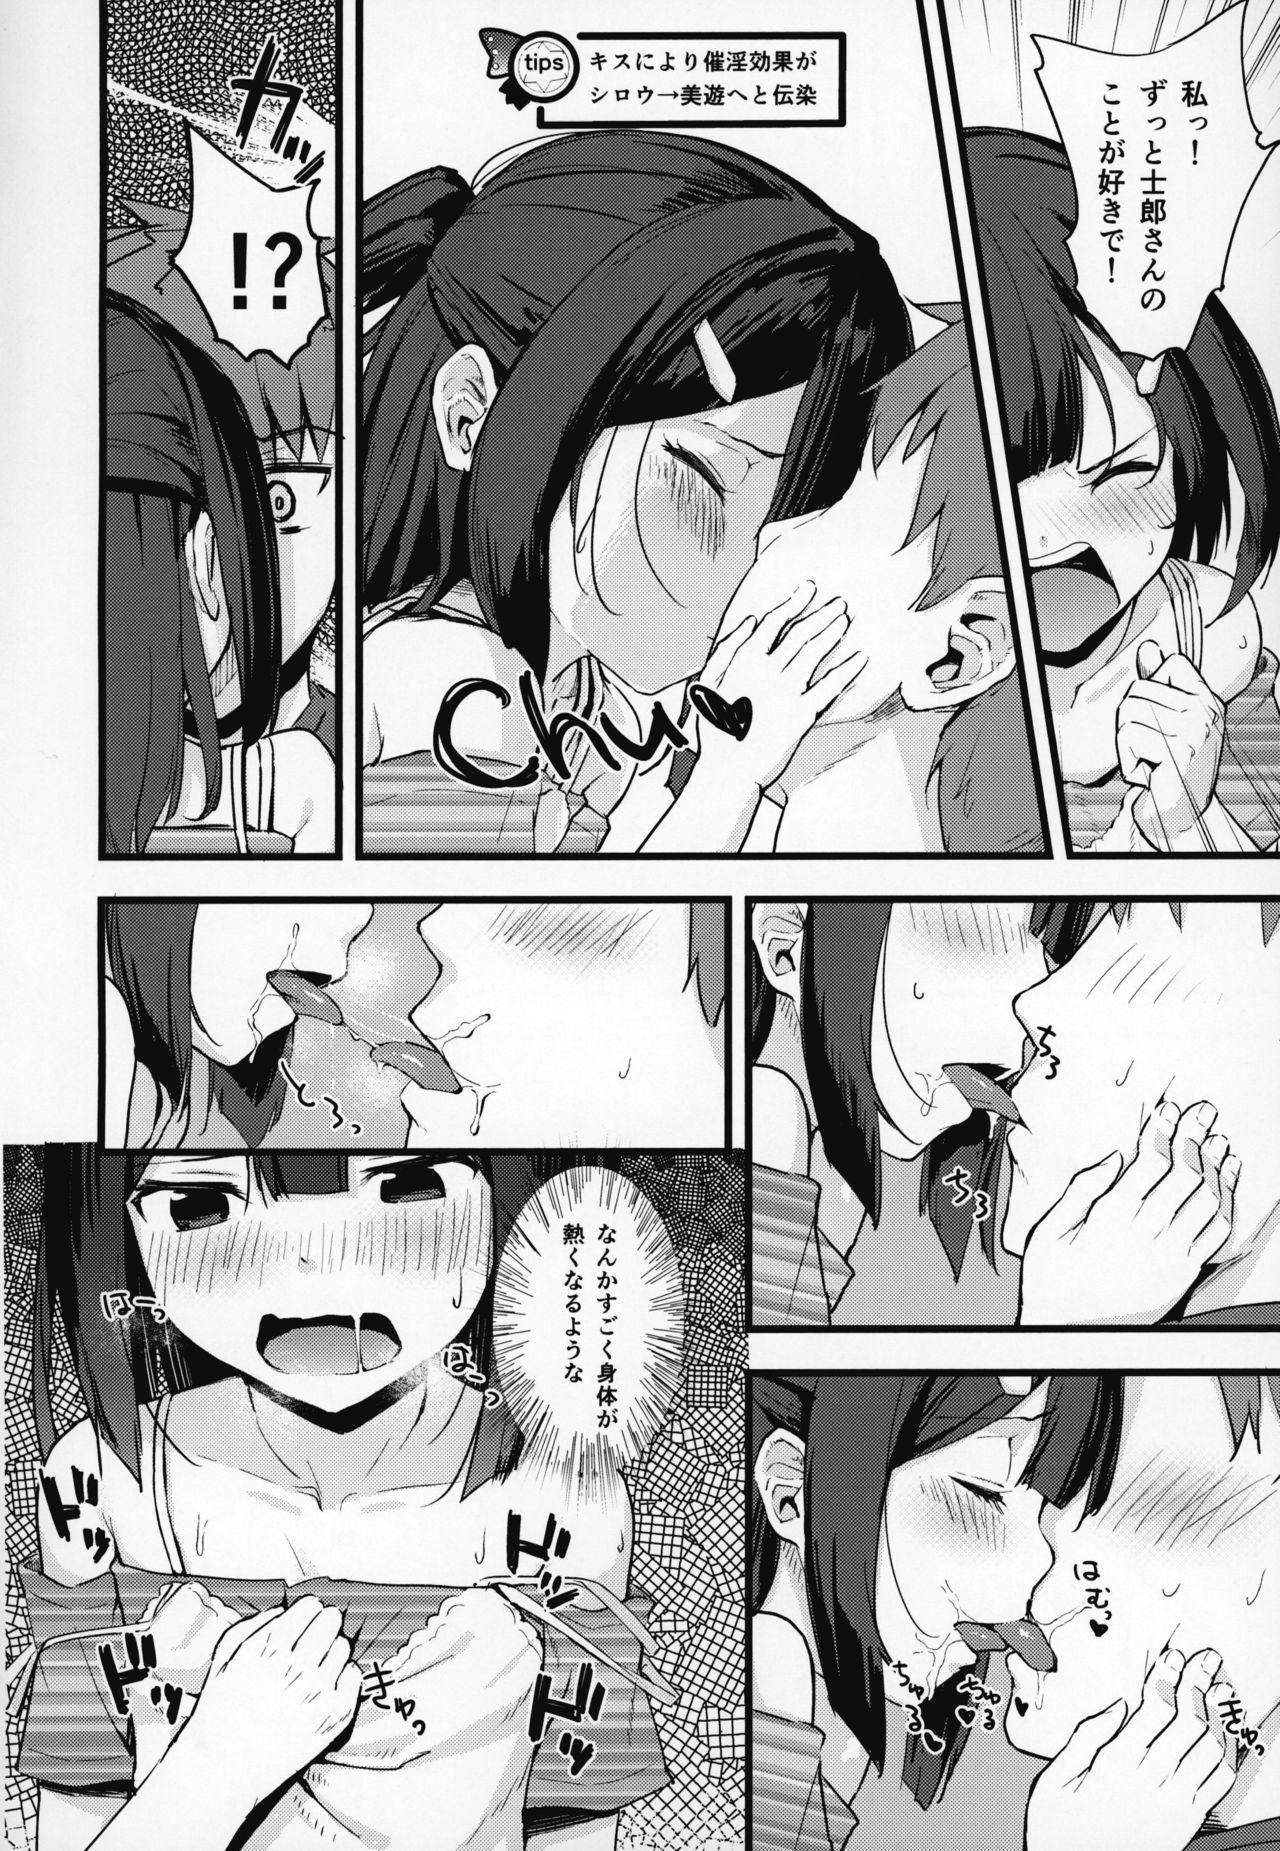 Infiel Miyu-chan no Install! Sweet Sister! - Fate kaleid liner prisma illya Adolescente - Page 5